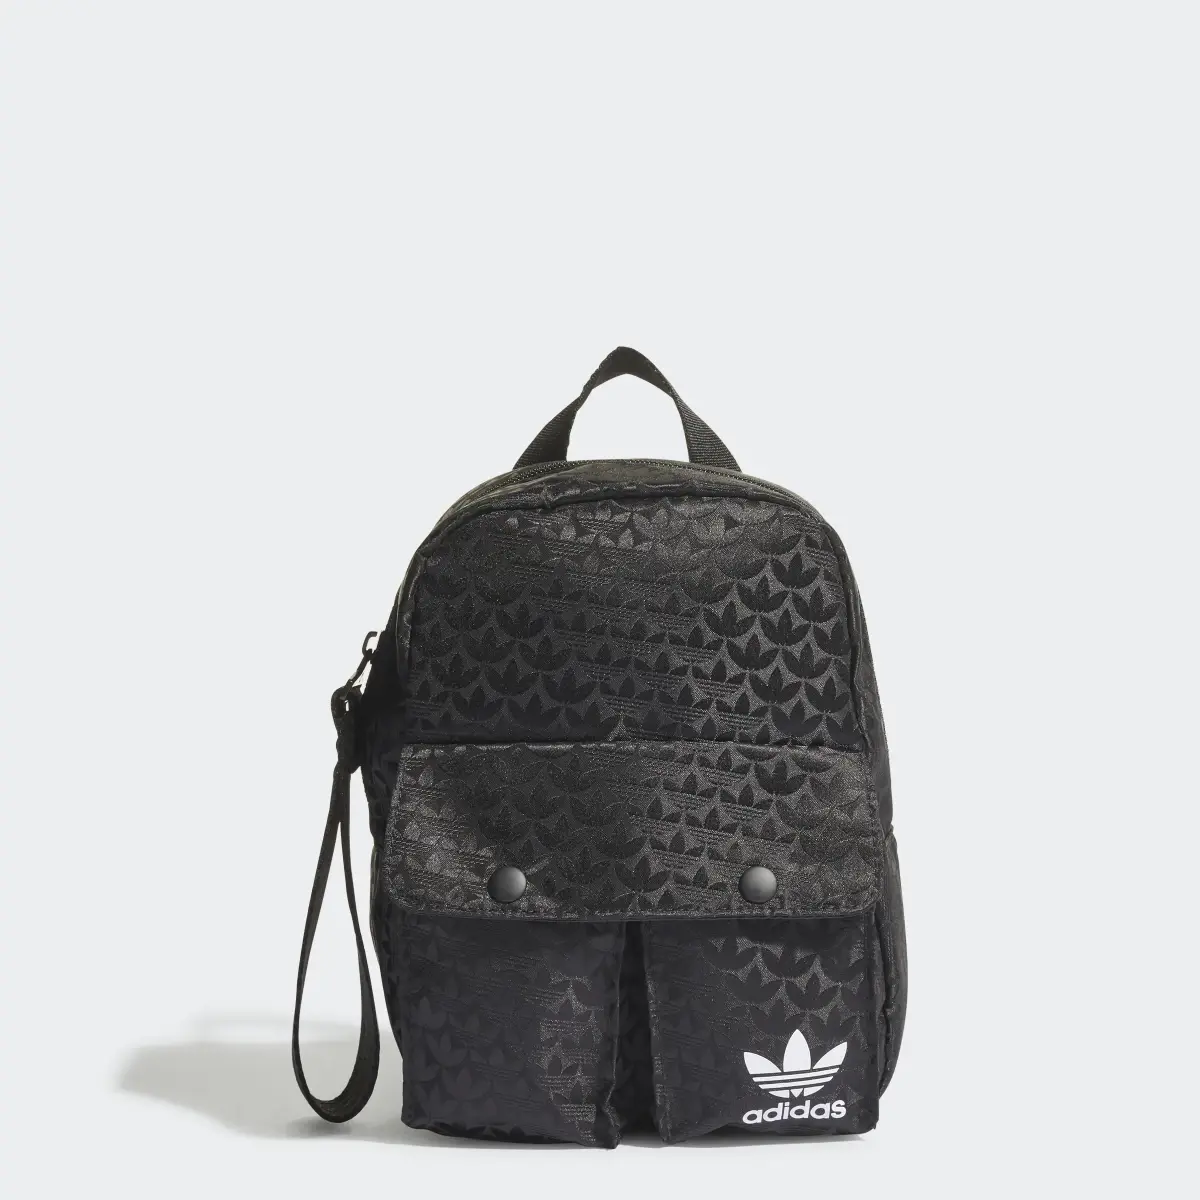 Adidas Mini Backpack. 1